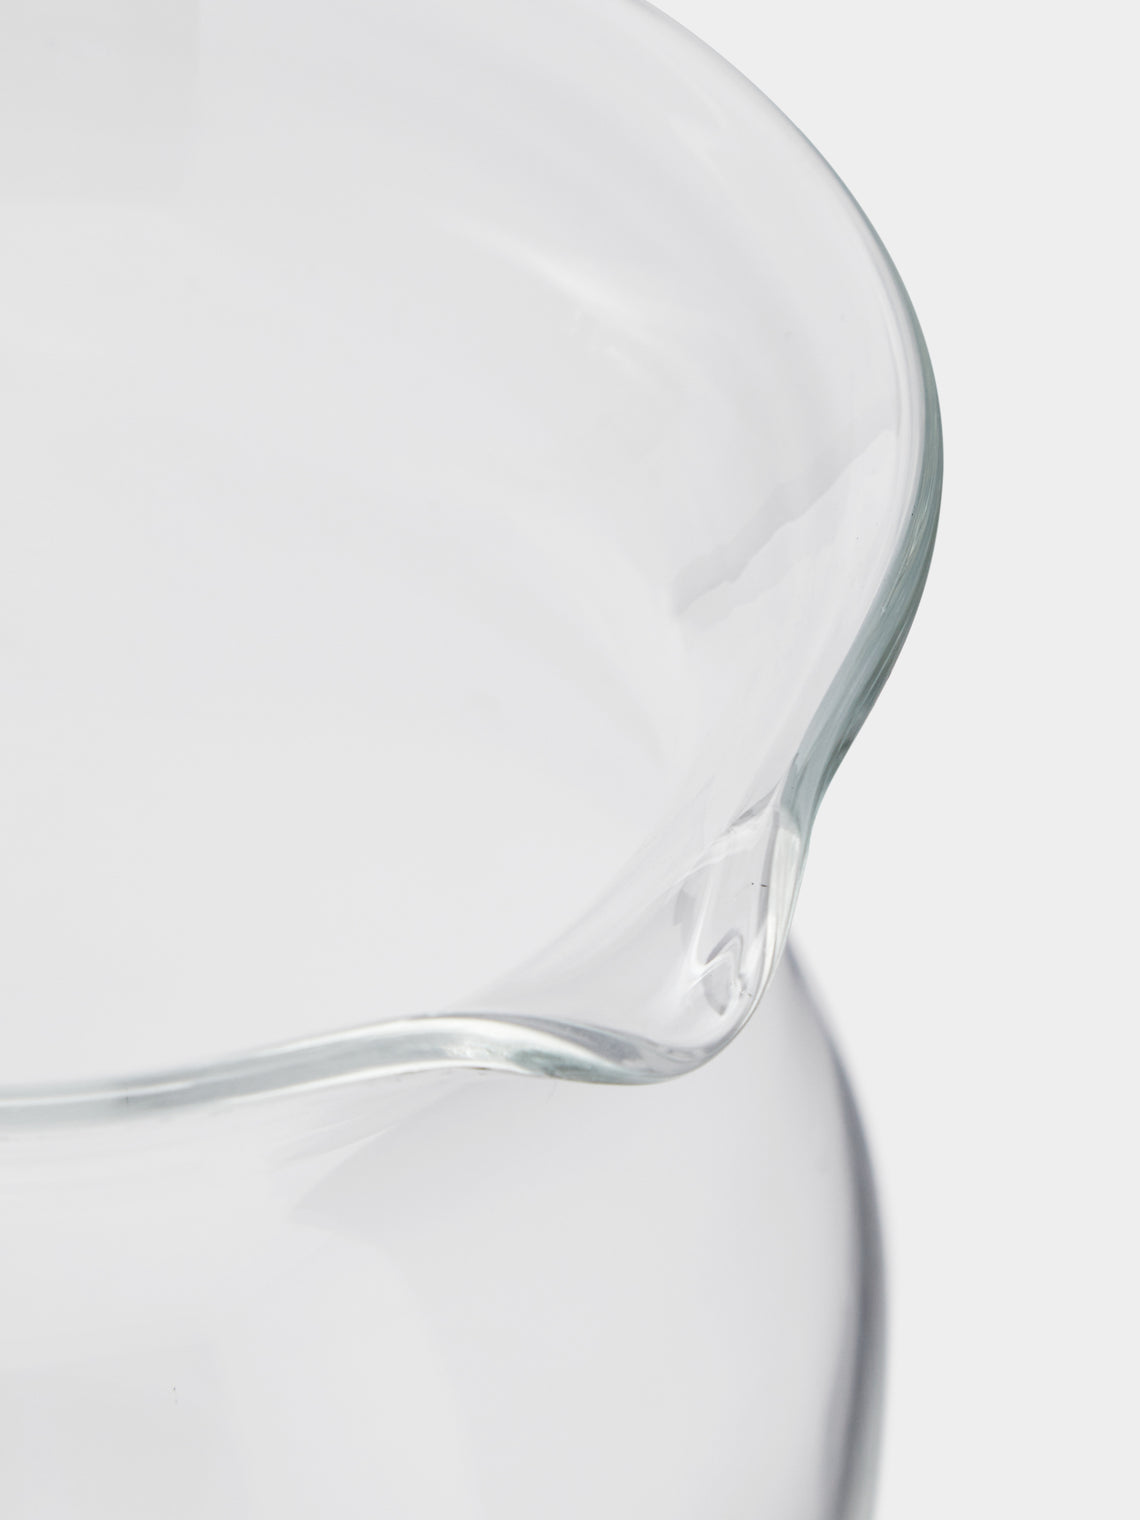 NasonMoretti - A/81 Hand-Blown Murano Glass Pitcher -  - ABASK